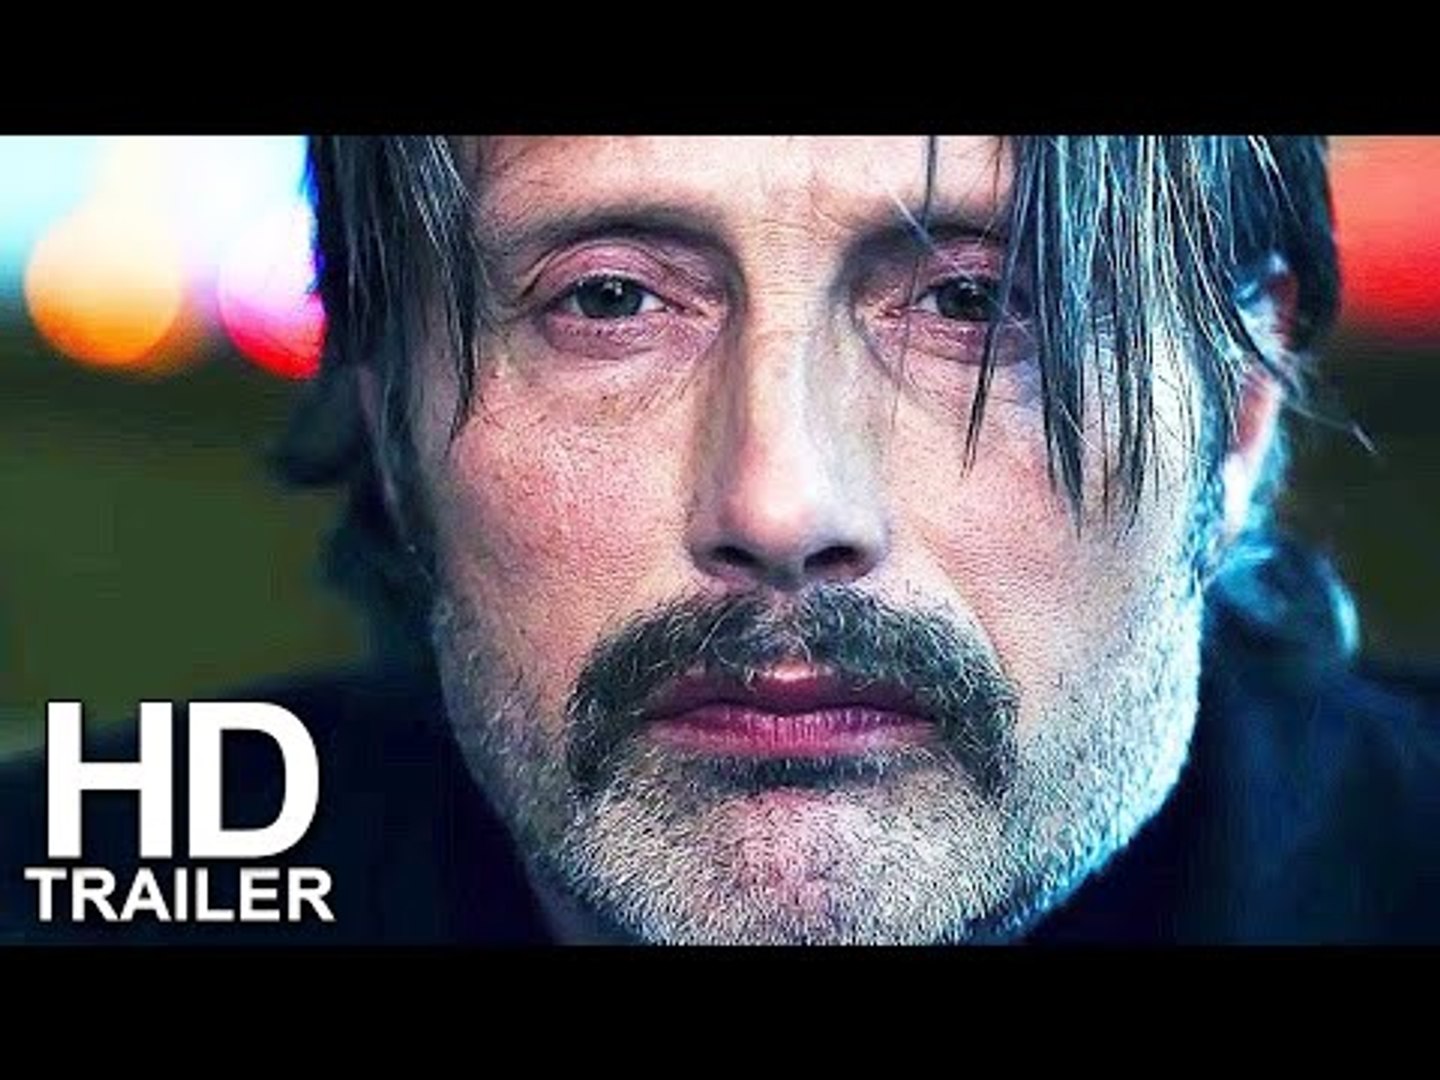 POLAR Trailer (Action Thriller 2019) - Mads Mikkelsen Netflix Film 